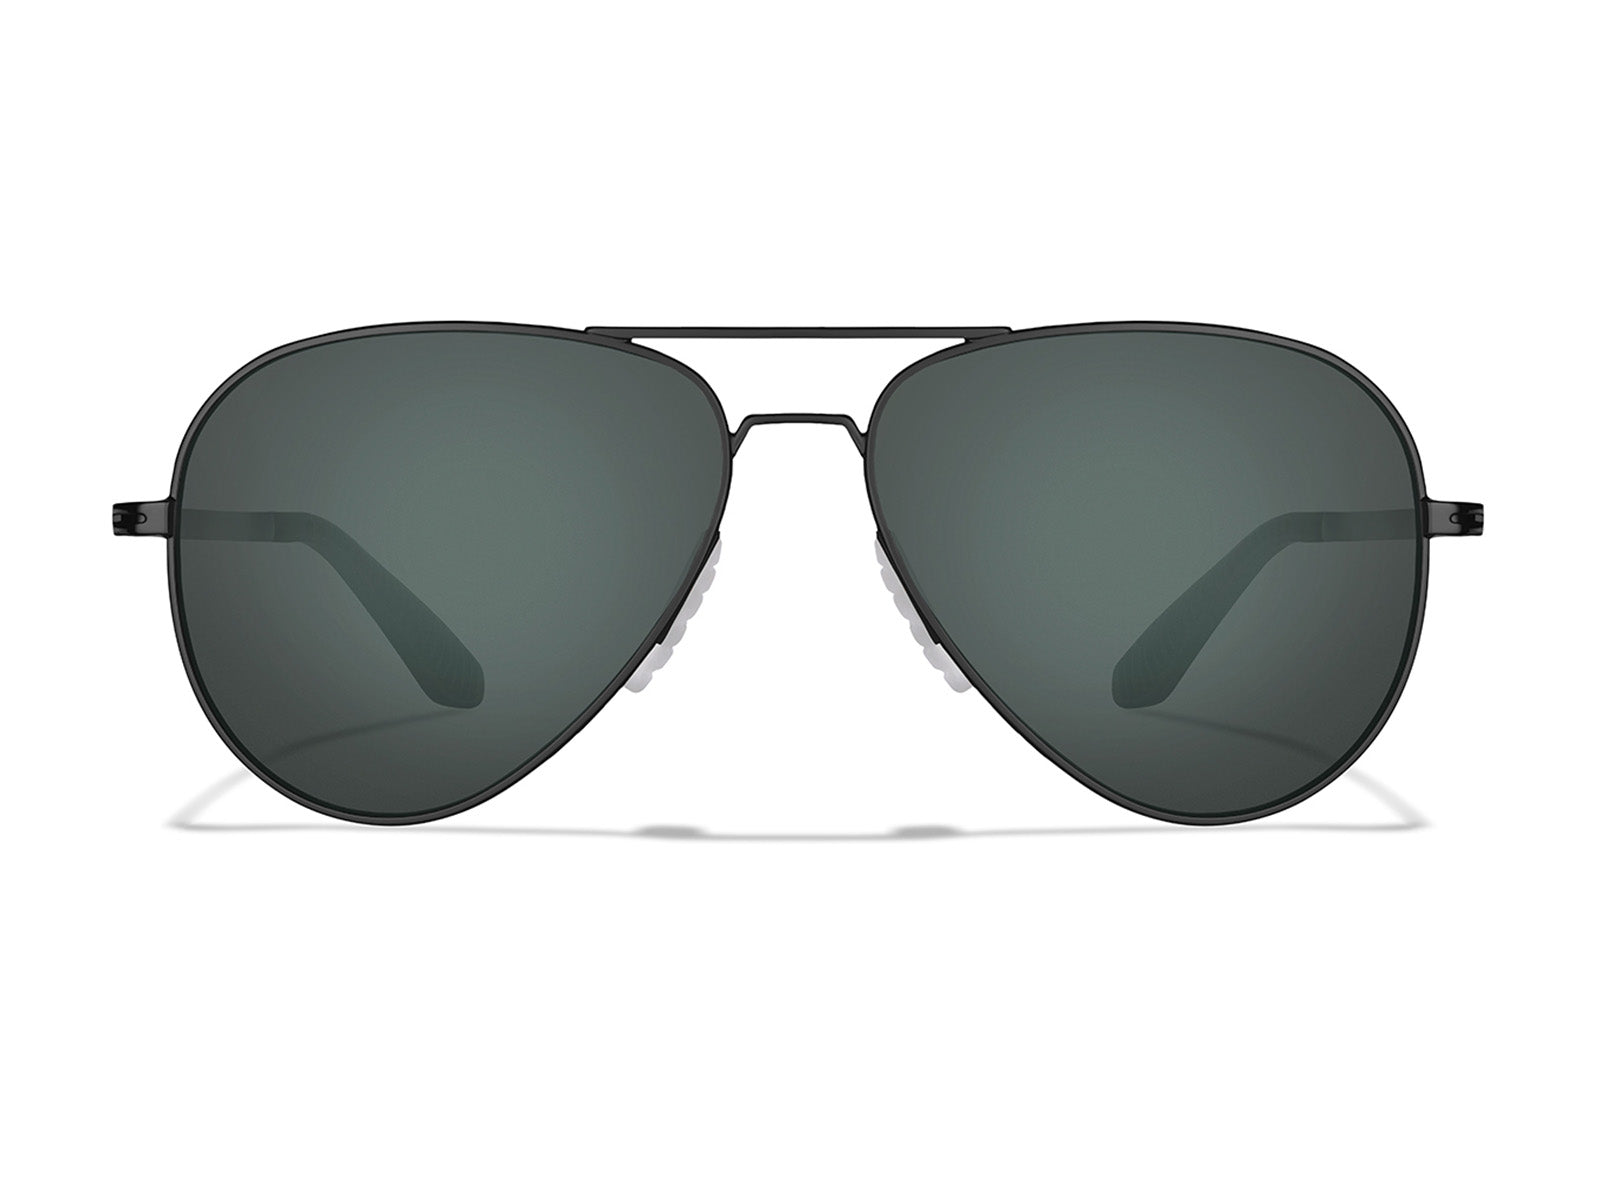 Custom Printed Retro Sunglasses